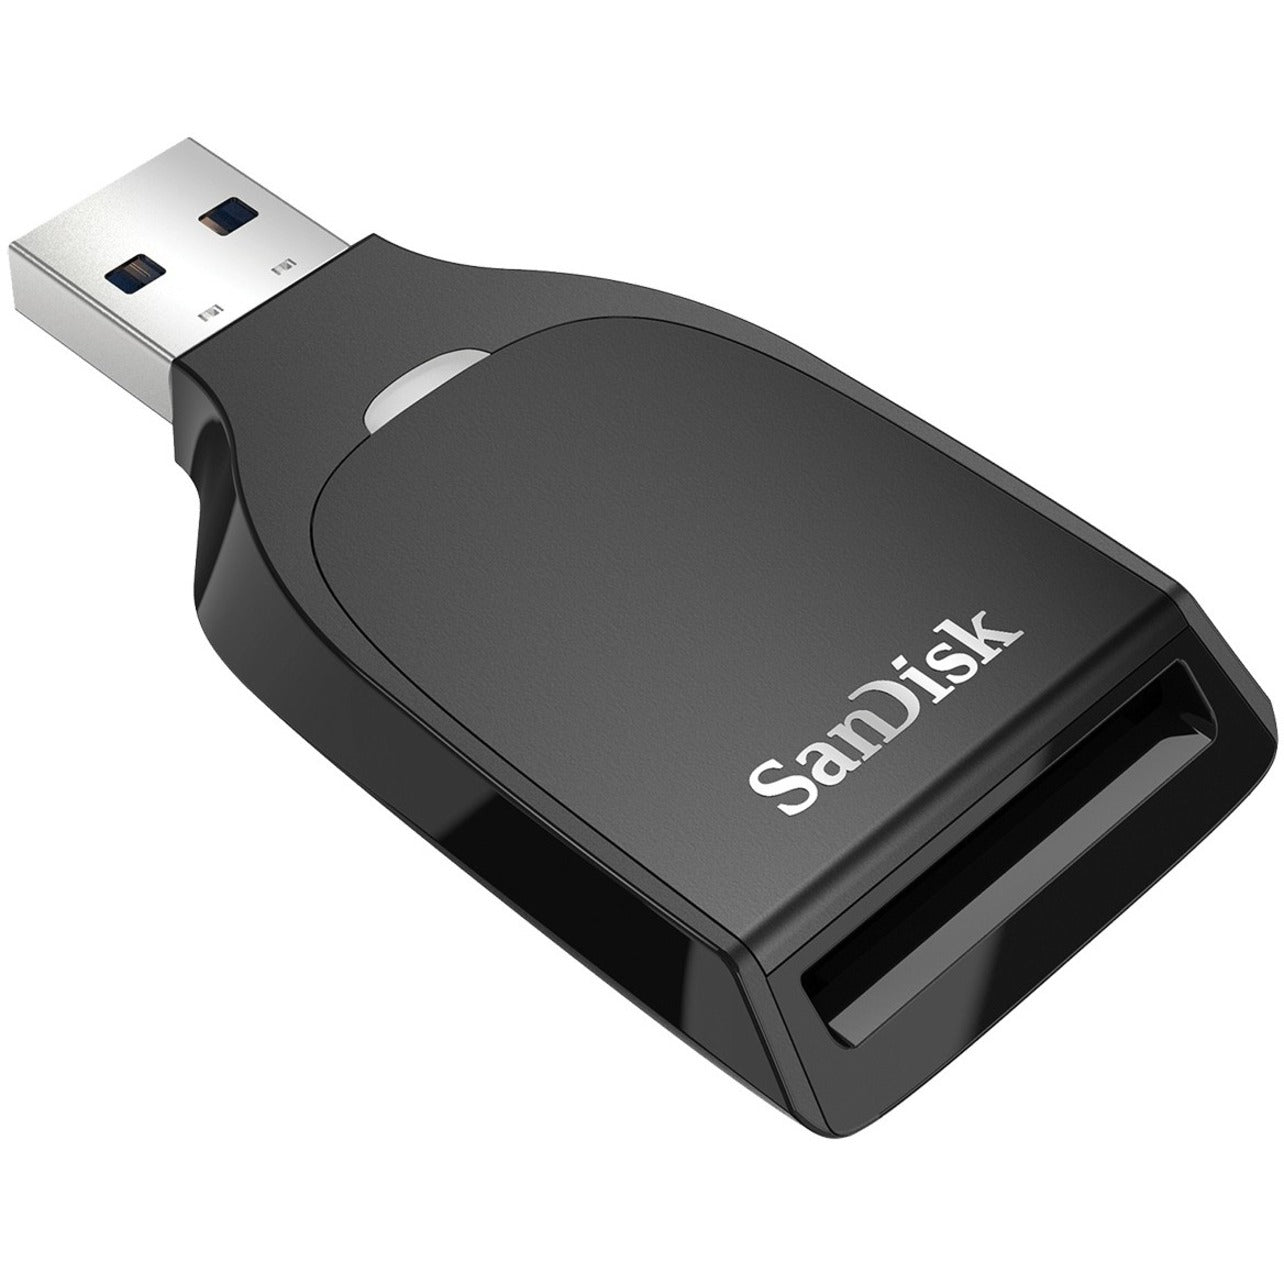 SanDisk SDDR-C531-ANANN SD UHS-I Card Reader, USB 3.0 Type A, 2 Year Warranty, China Origin